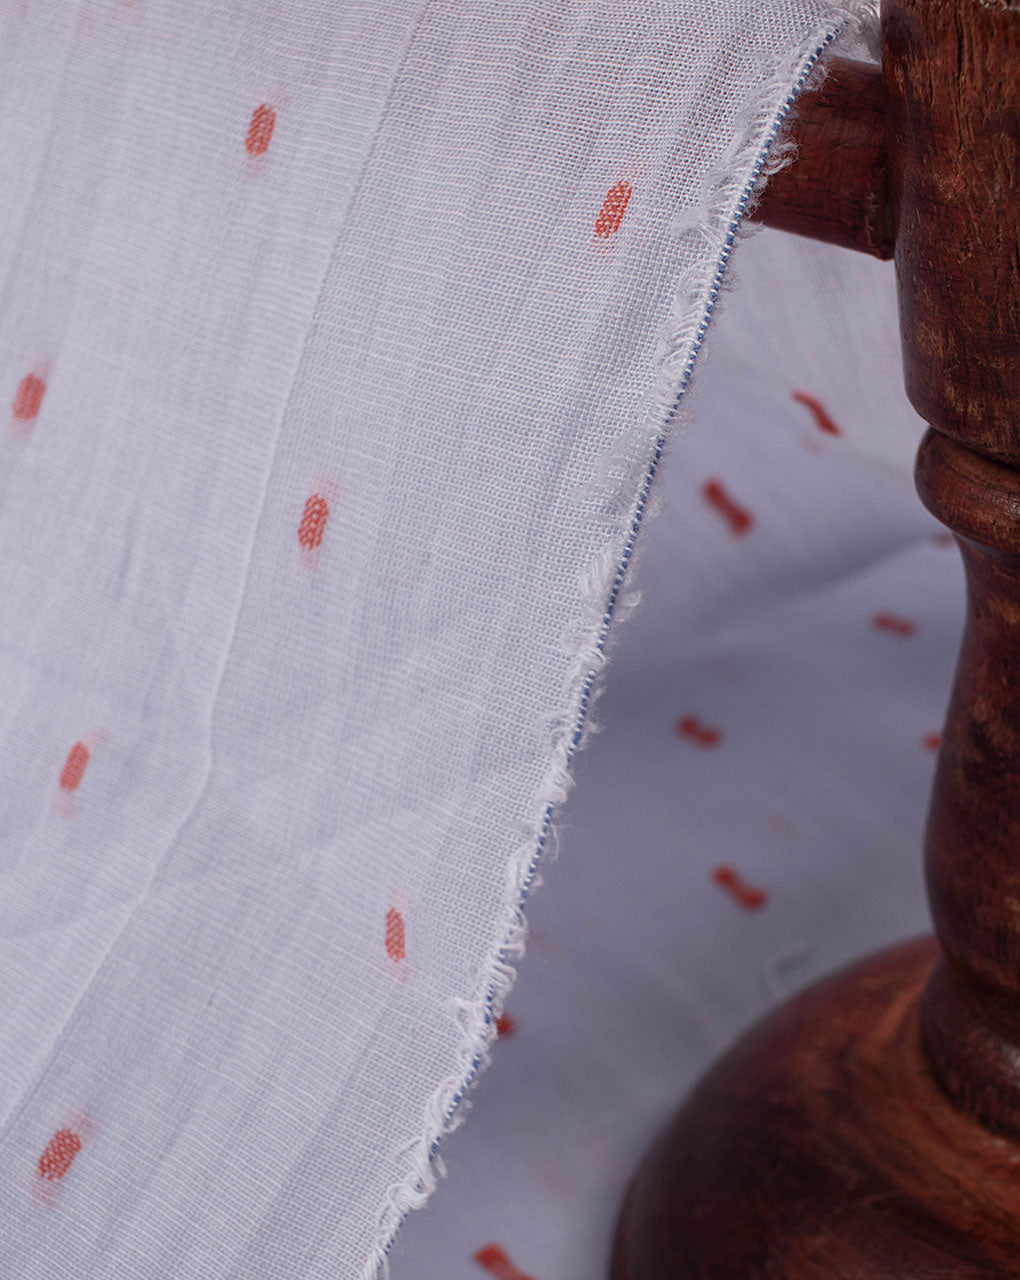 Woven Jacquard Loom Textured Cotton Fabric - Fabriclore.com